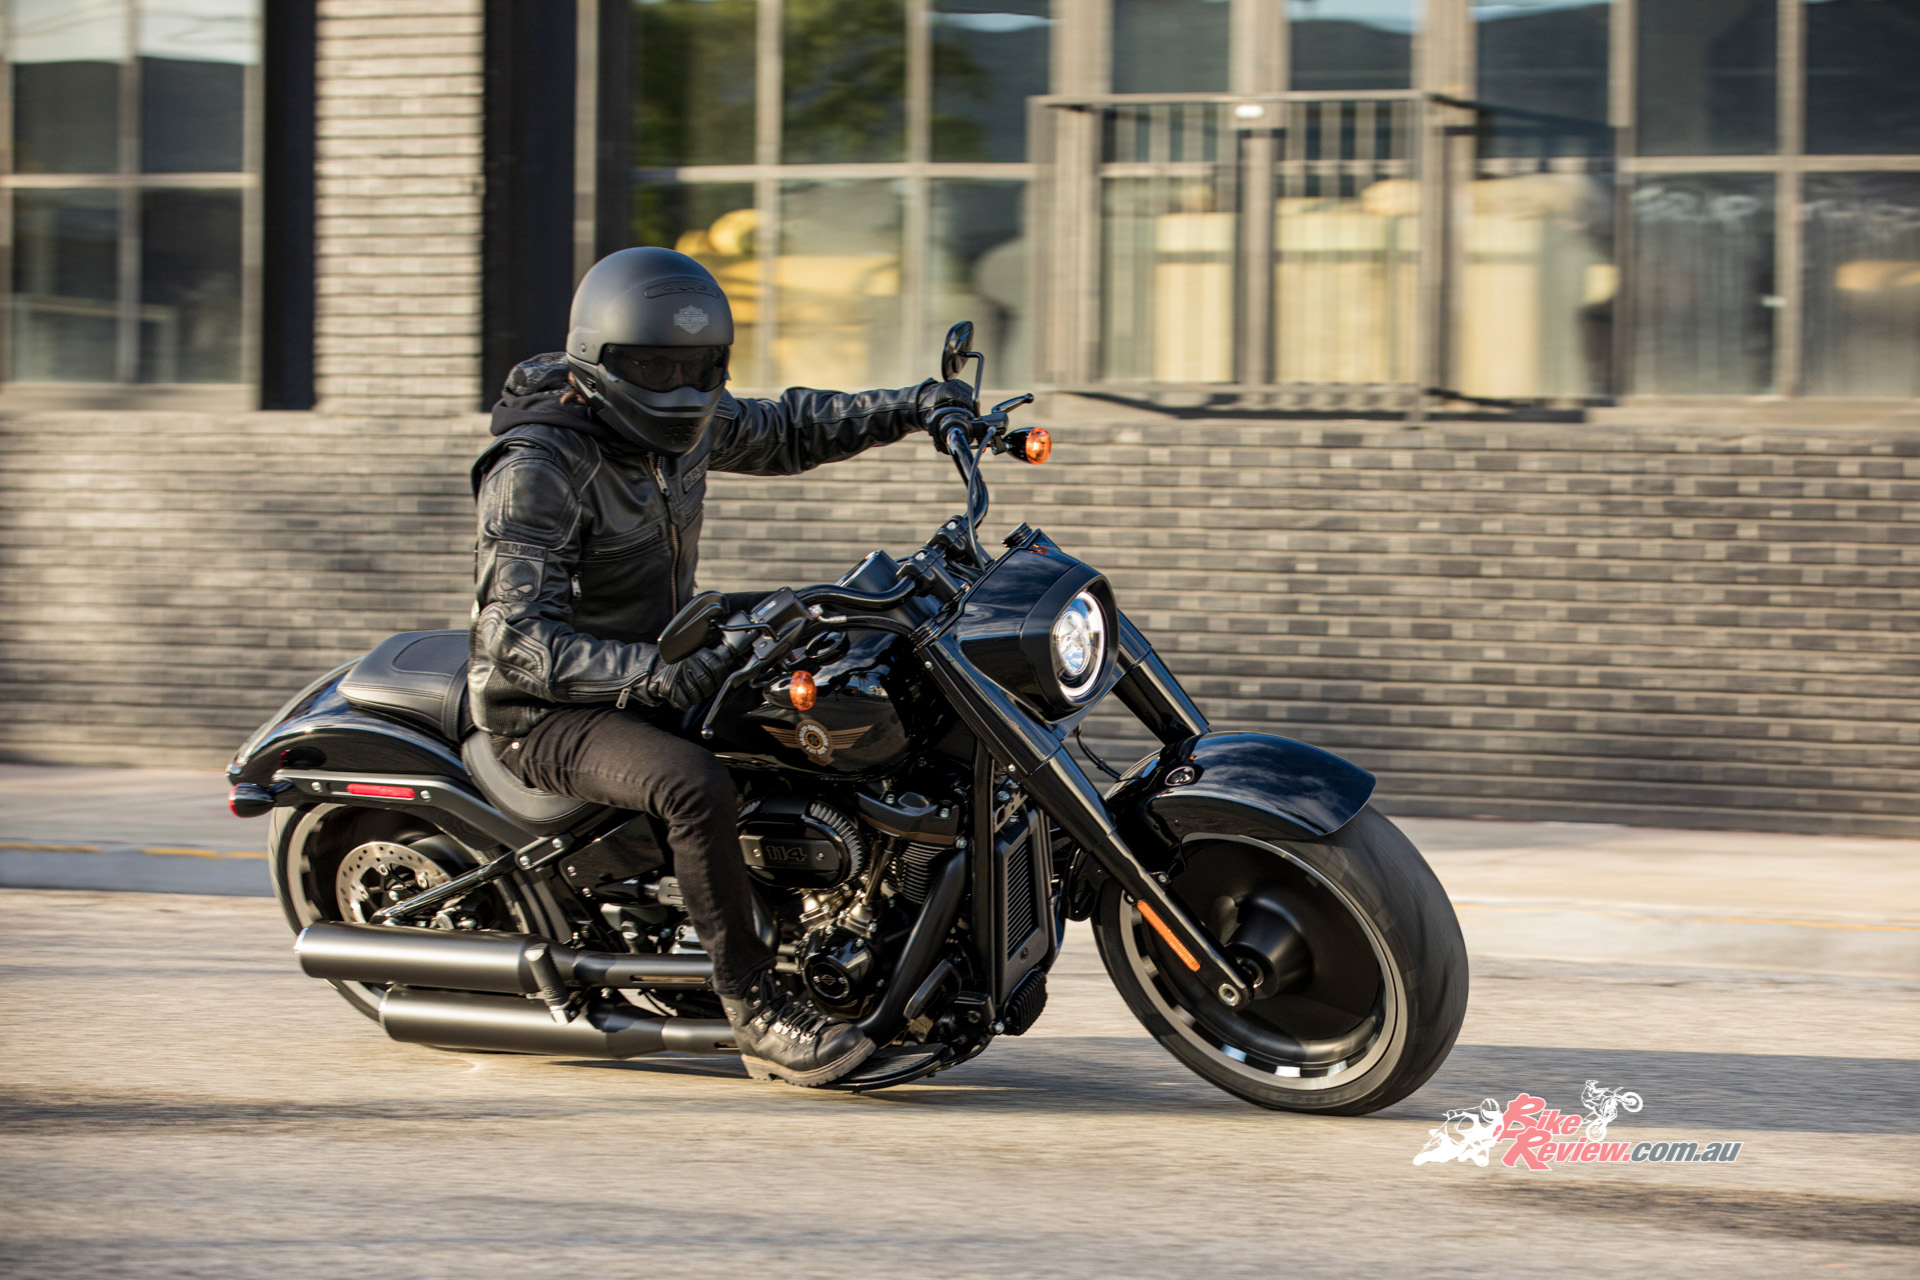 New Harley Davidson Cvo Road Glide And Fat Boy Models Bike Review